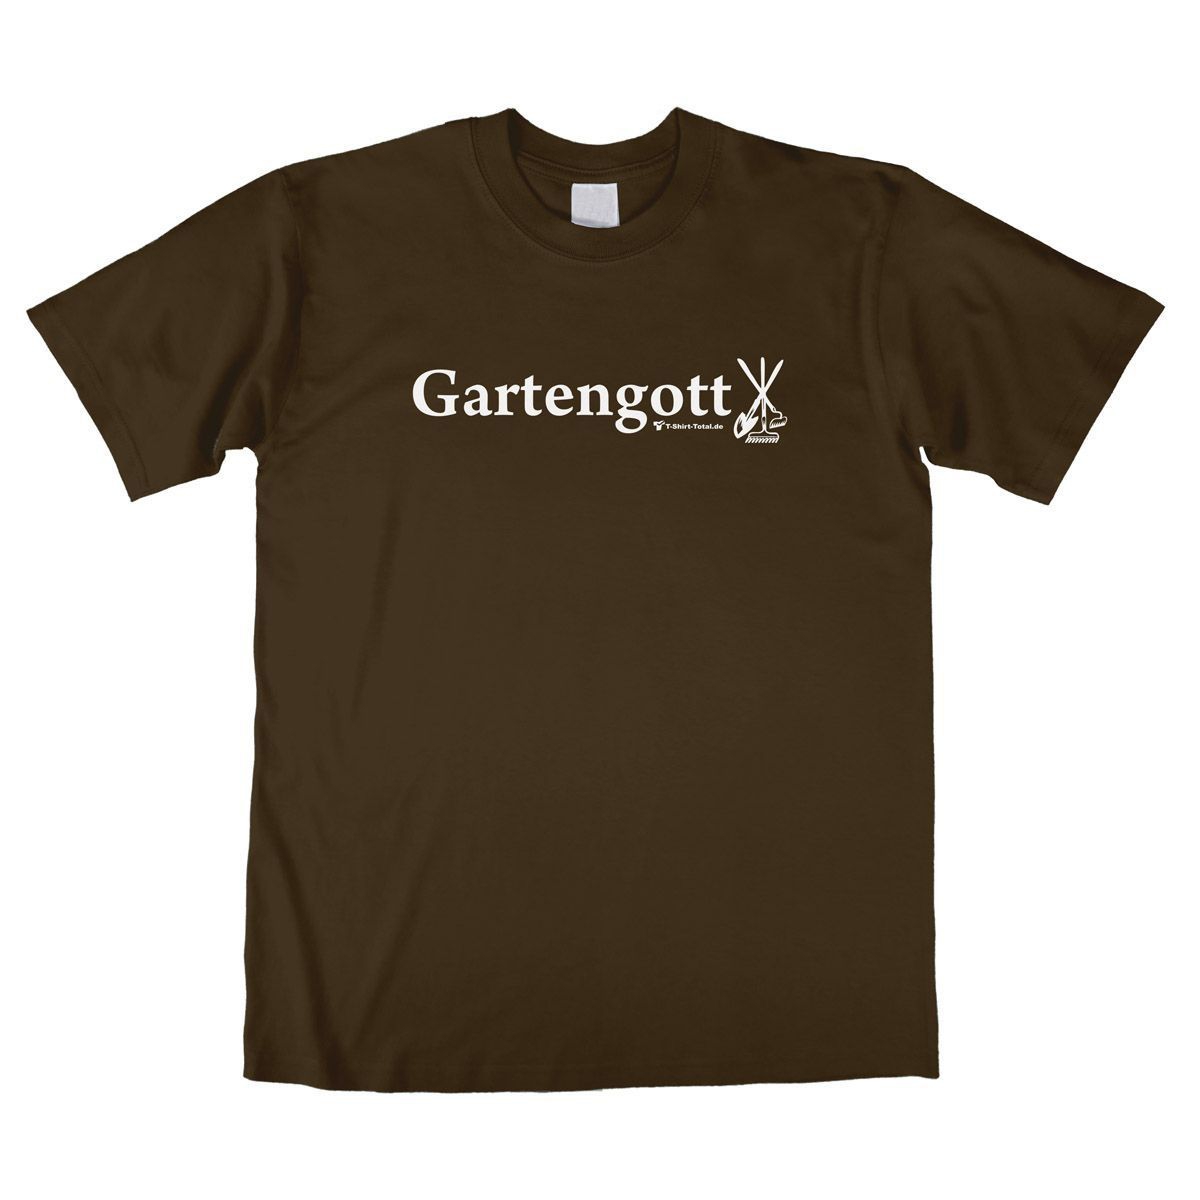 Gartengott Unisex T-Shirt braun Extra Large